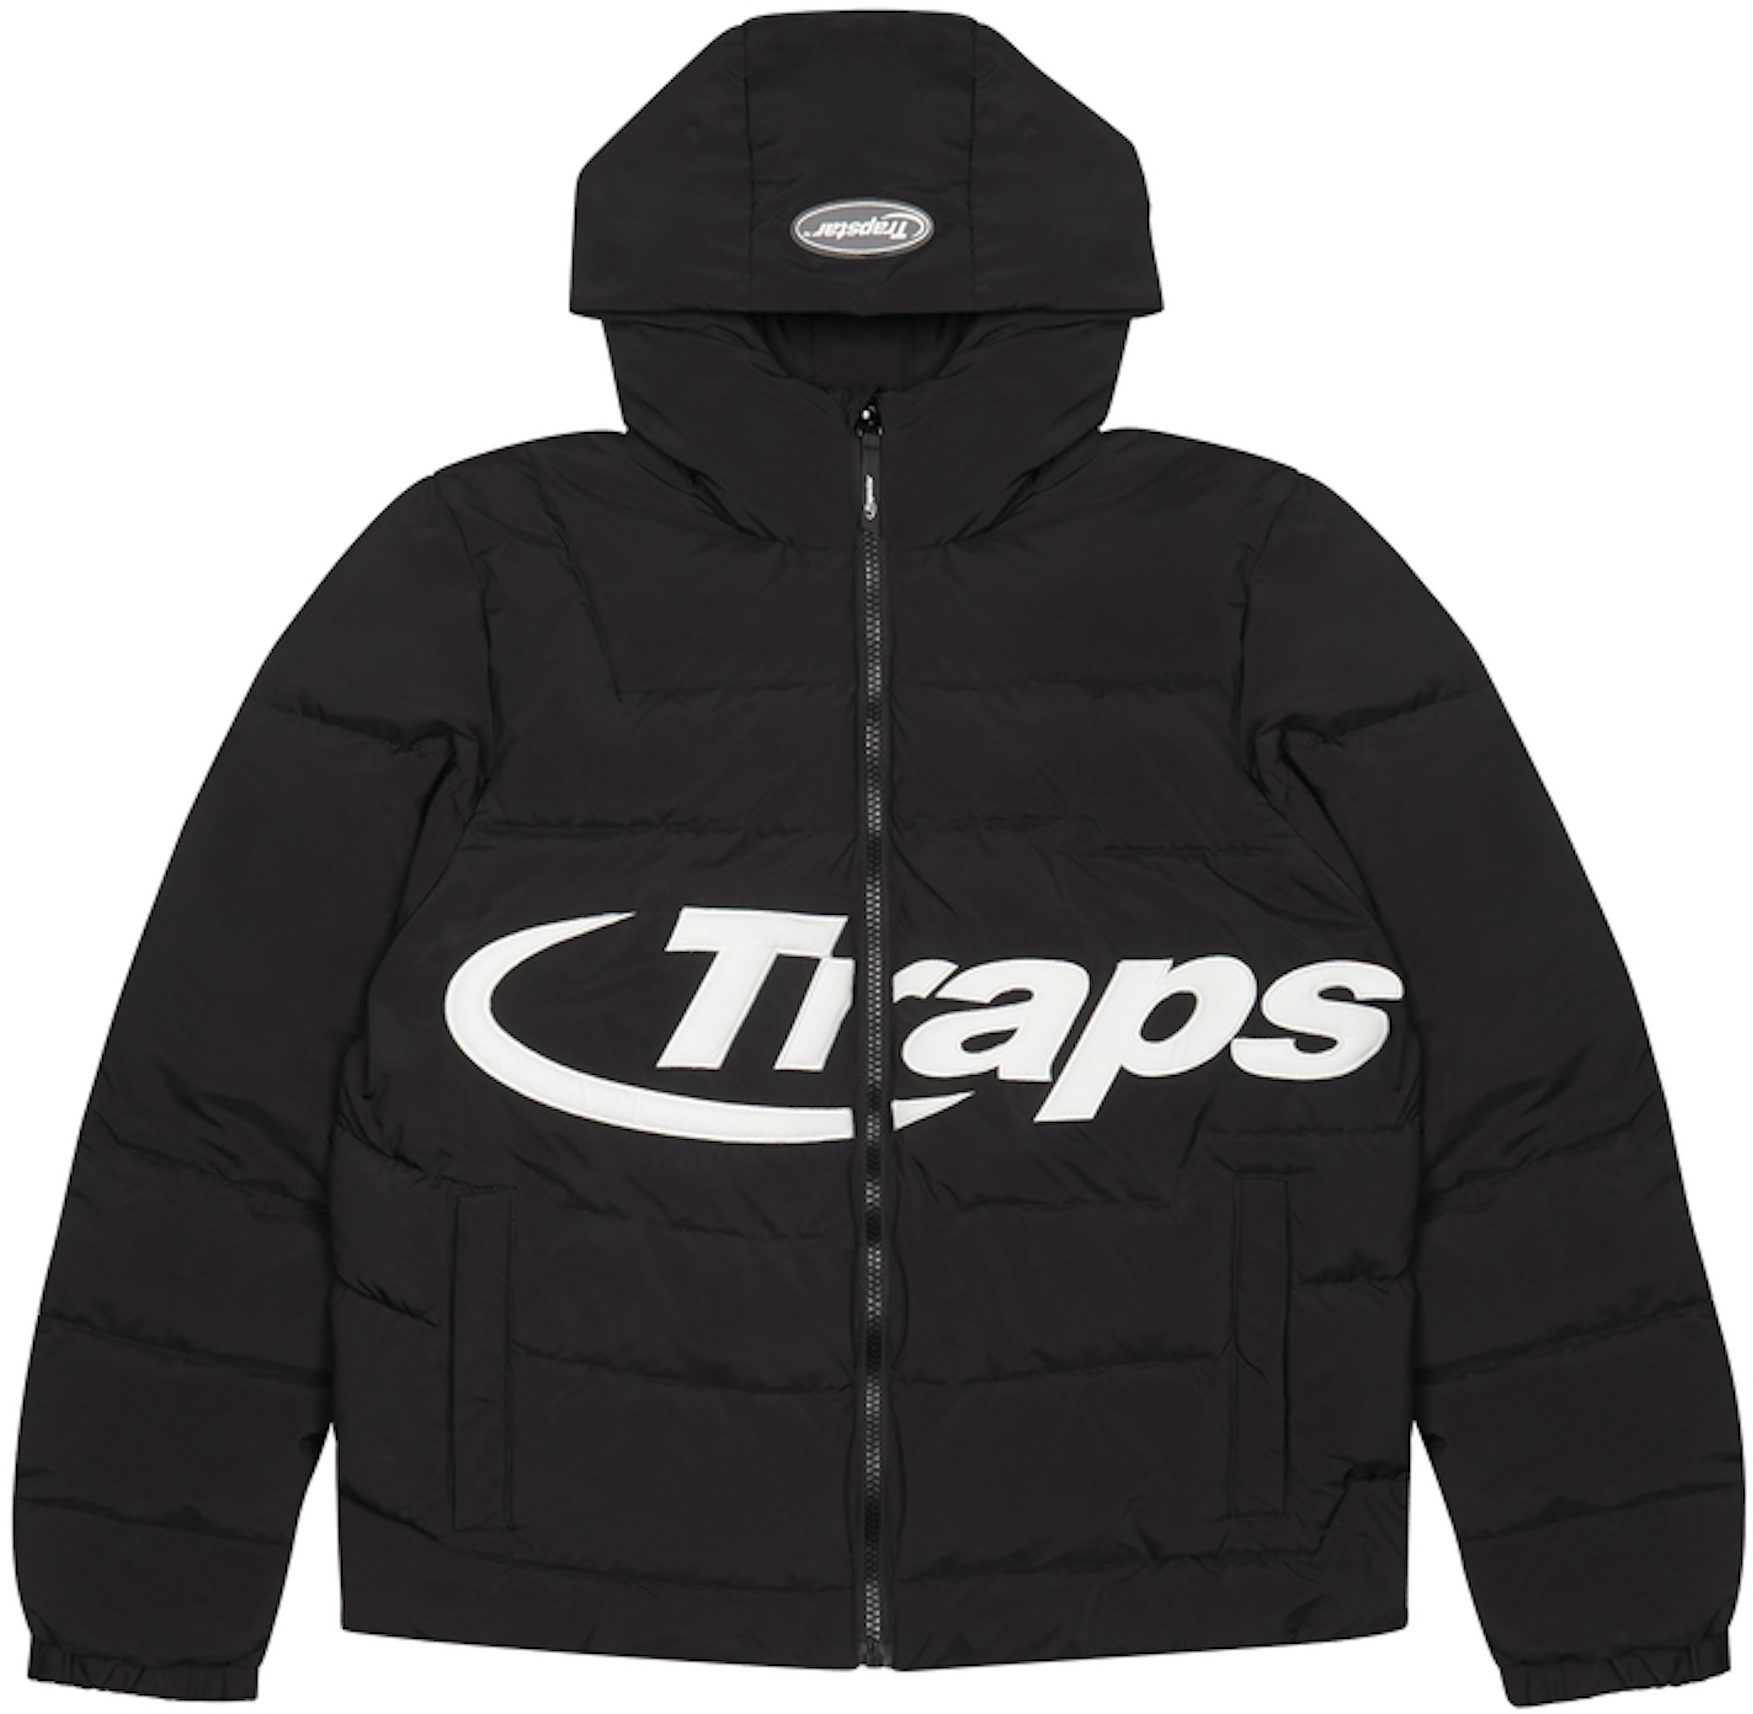 Trapstar Hyperdrive Hooded Puffer Jacket Black/Tie Dye Hombre - FW21 - US